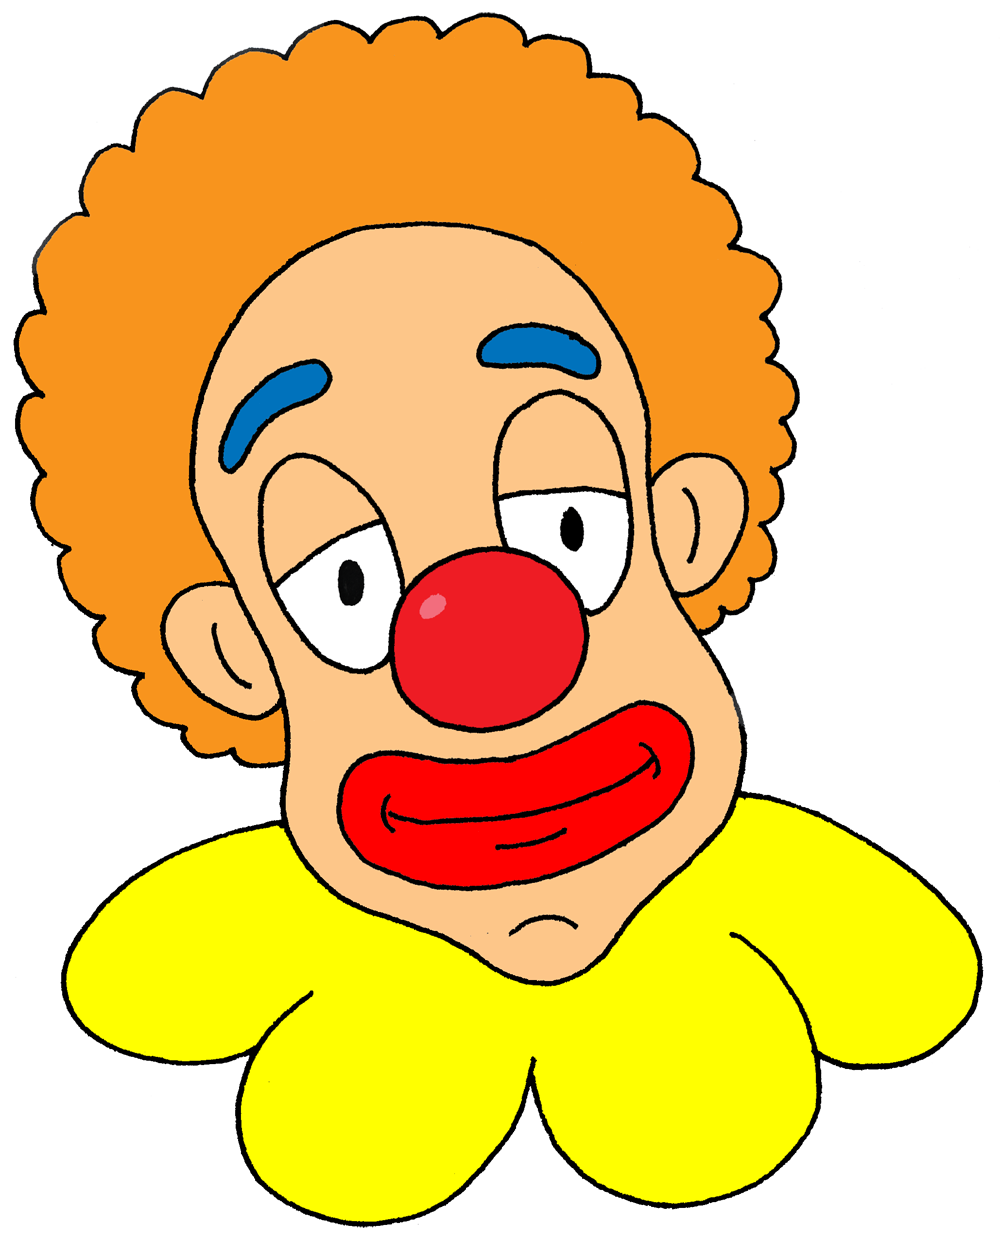 Clown Head Cartoon - ClipArt Best